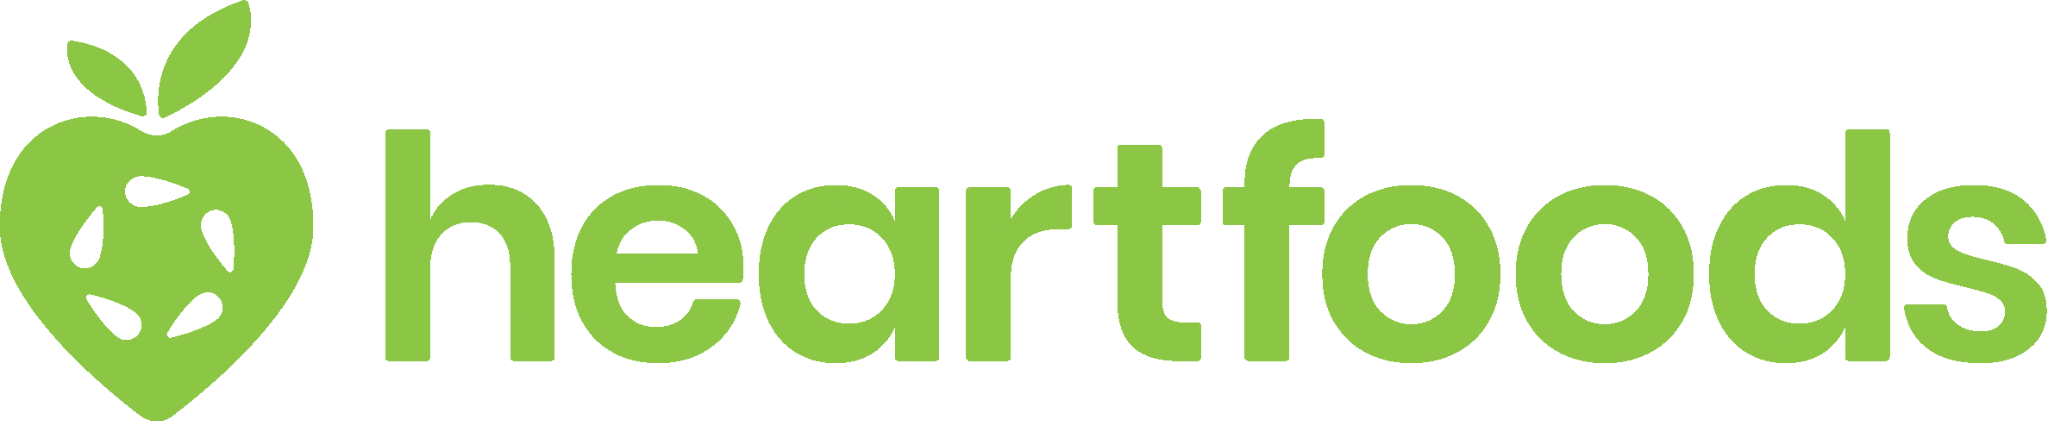 HeartFoods Group Logo